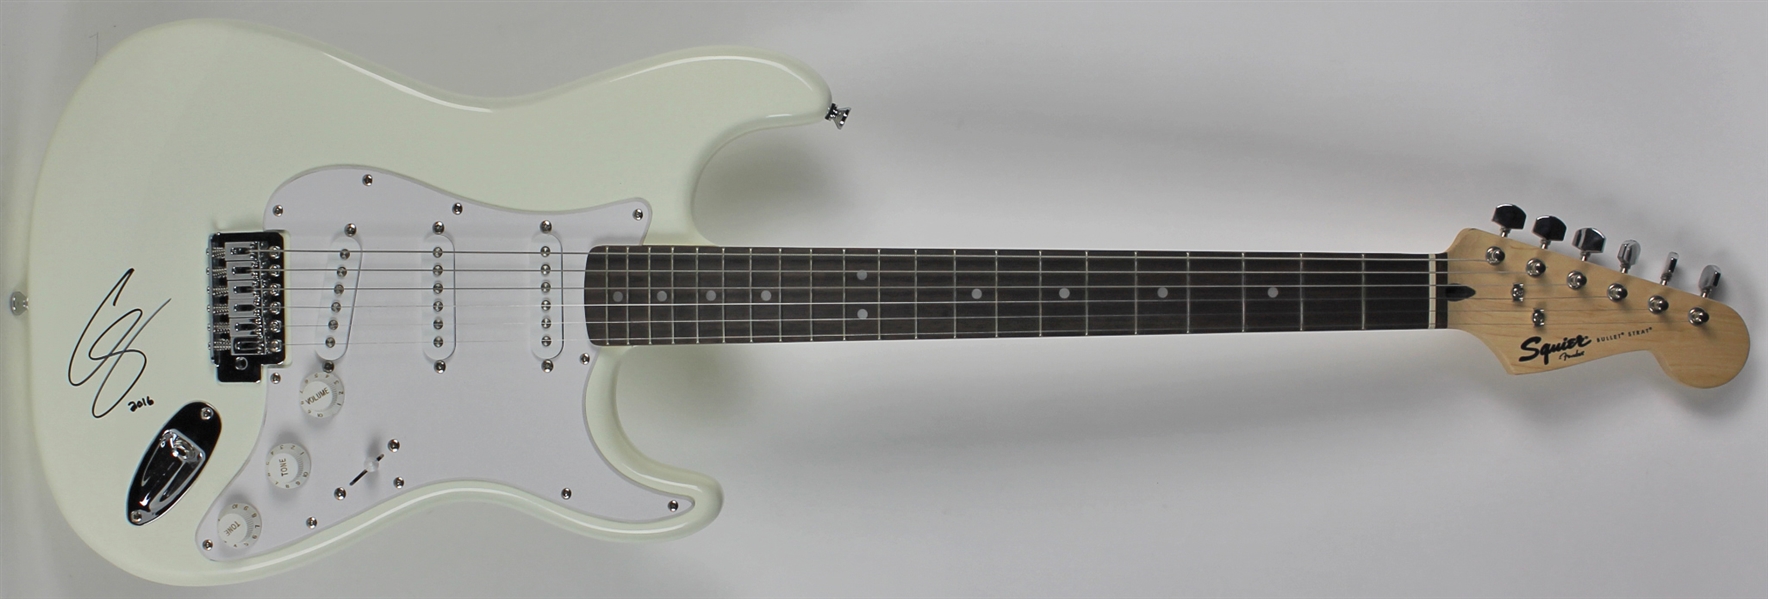 Chris Stapleton Signed Fender Squier Stratocaster Guitar (TPA Guaranteed)